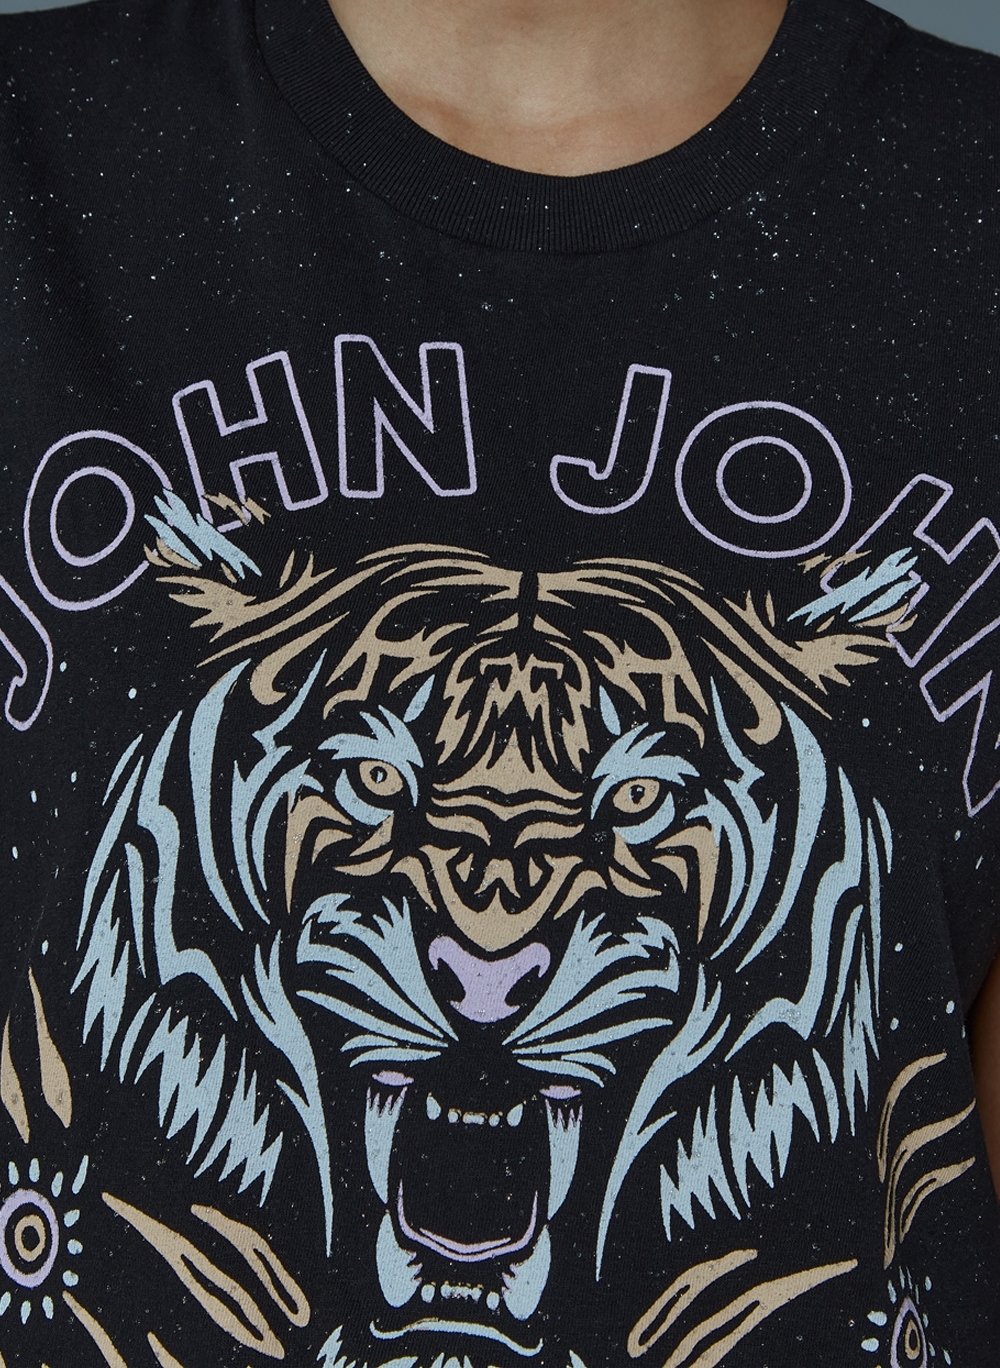 Camiseta Real Tigers John John Feminina 03.62.0258 - Camiseta Real